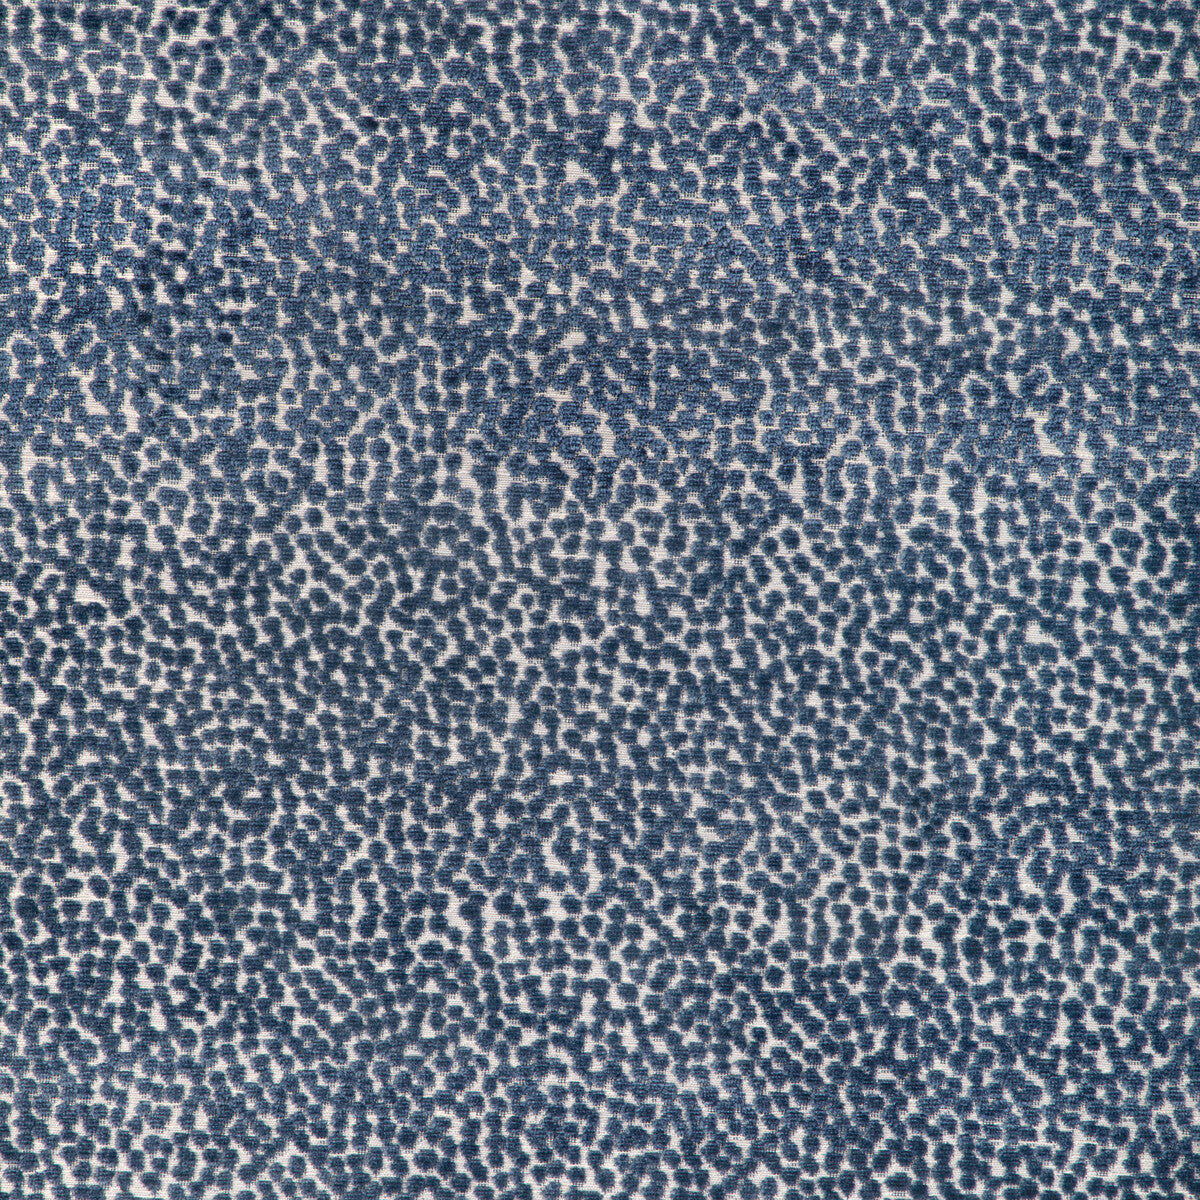 Kravet Design fabric in 36988-5 color - pattern 36988.5.0 - by Kravet Design in the Modern Velvets collection